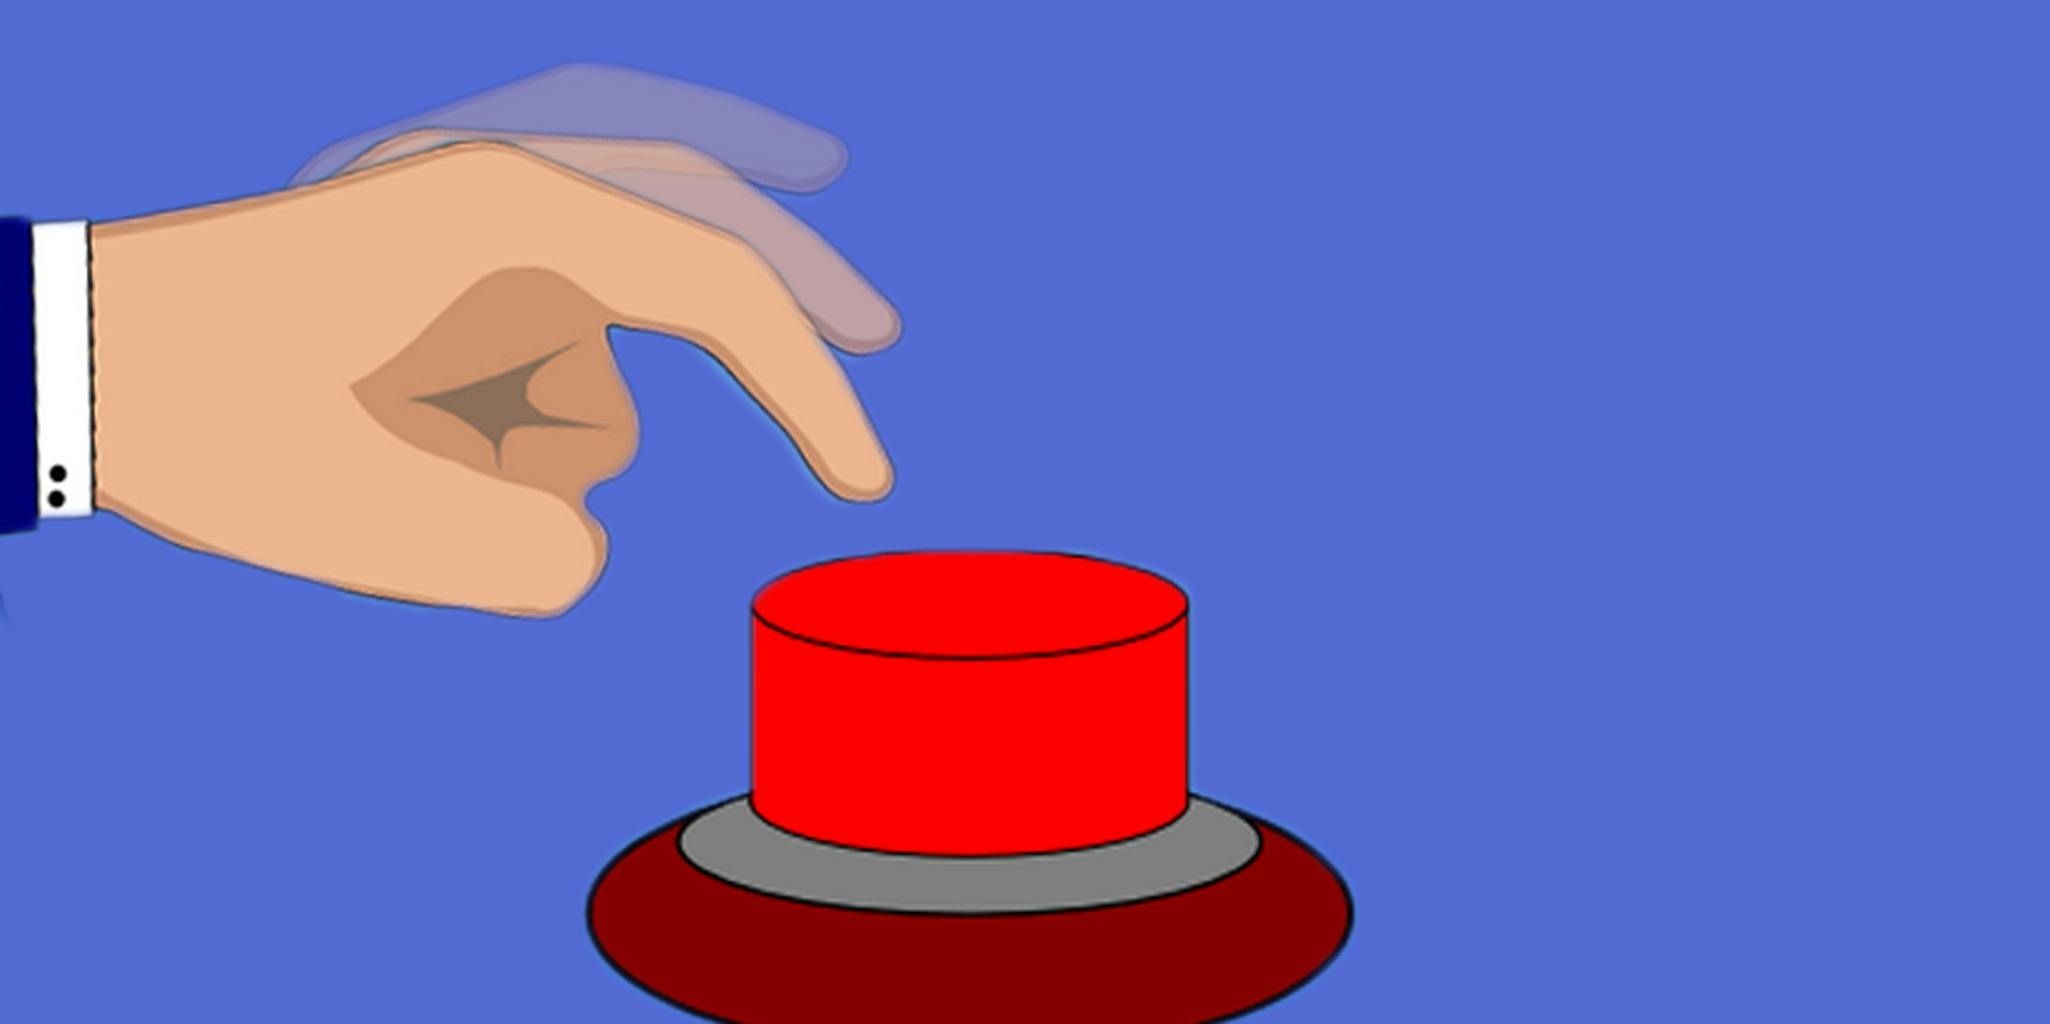 Нажатие на кнопку гиф. Жмет на кнопку. Анимация нажатия кнопки. Нажатие на красную кнопку гиф.